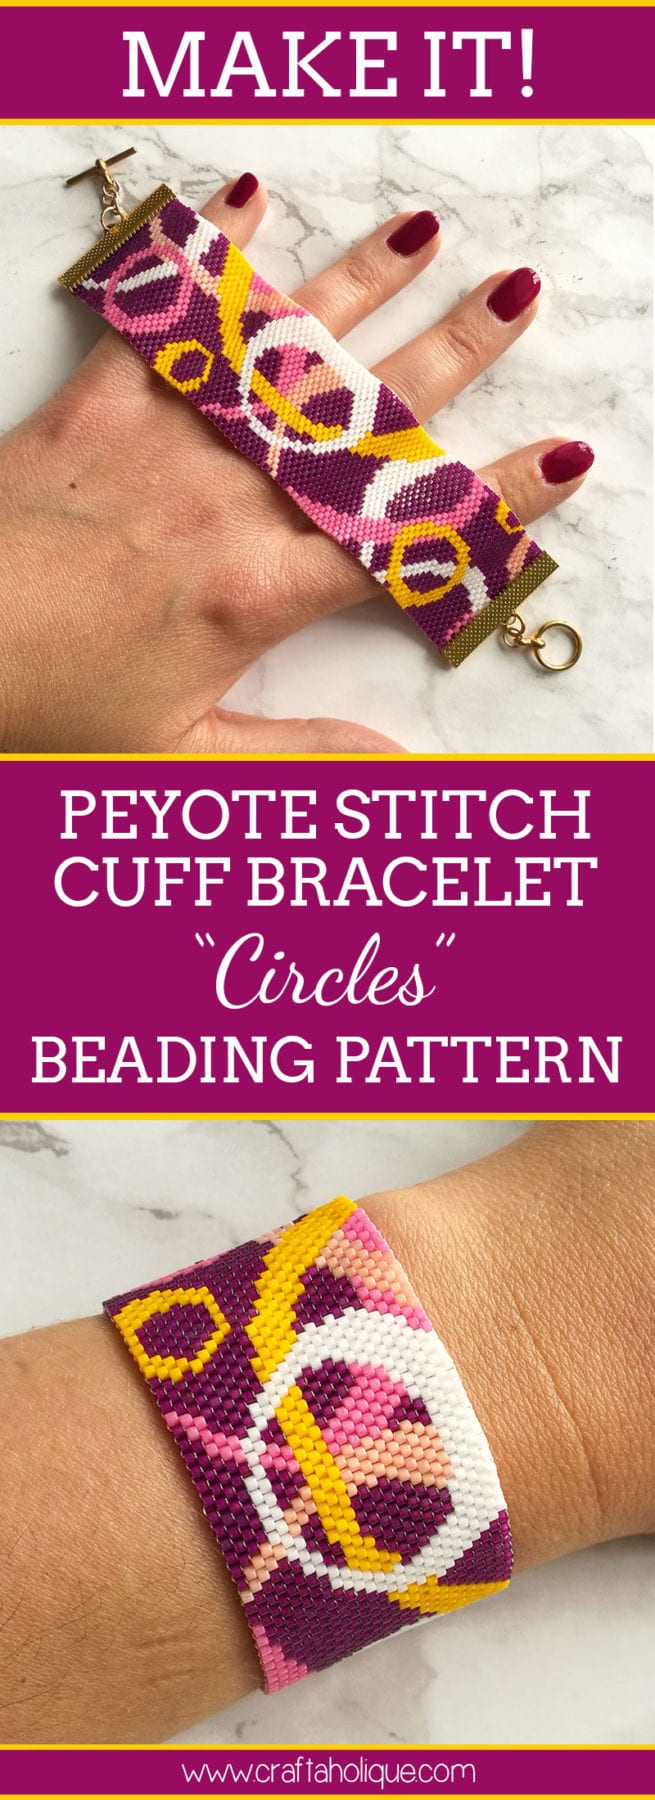 Circle design peyote stitch bracelet pattern by Craftaholique